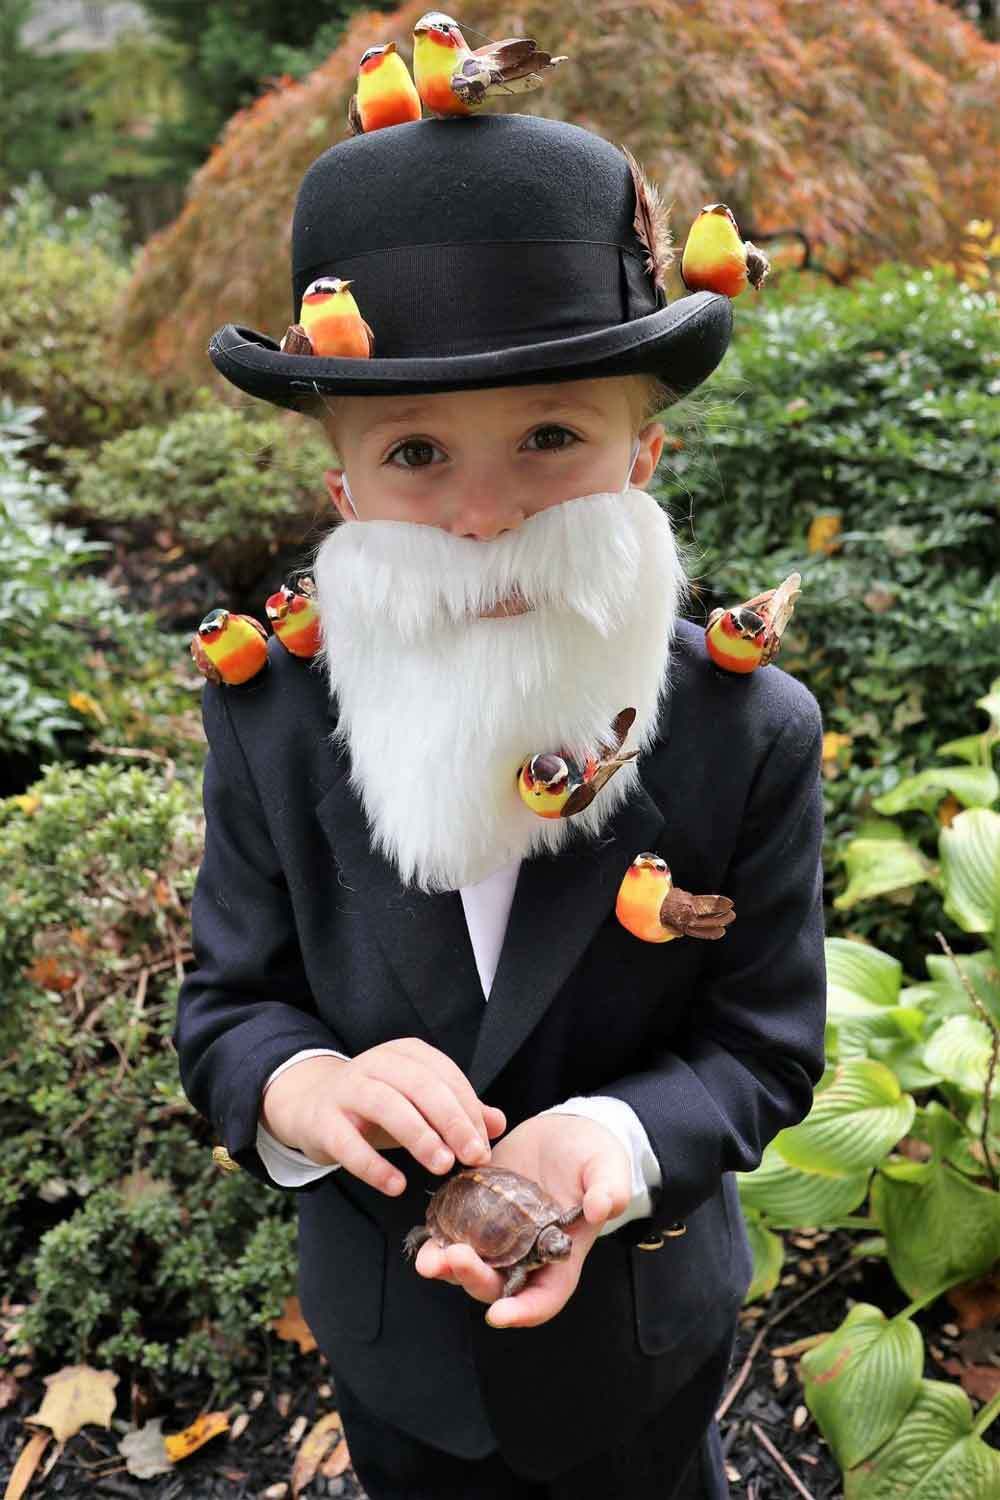 Pistun dressed up as Darwin